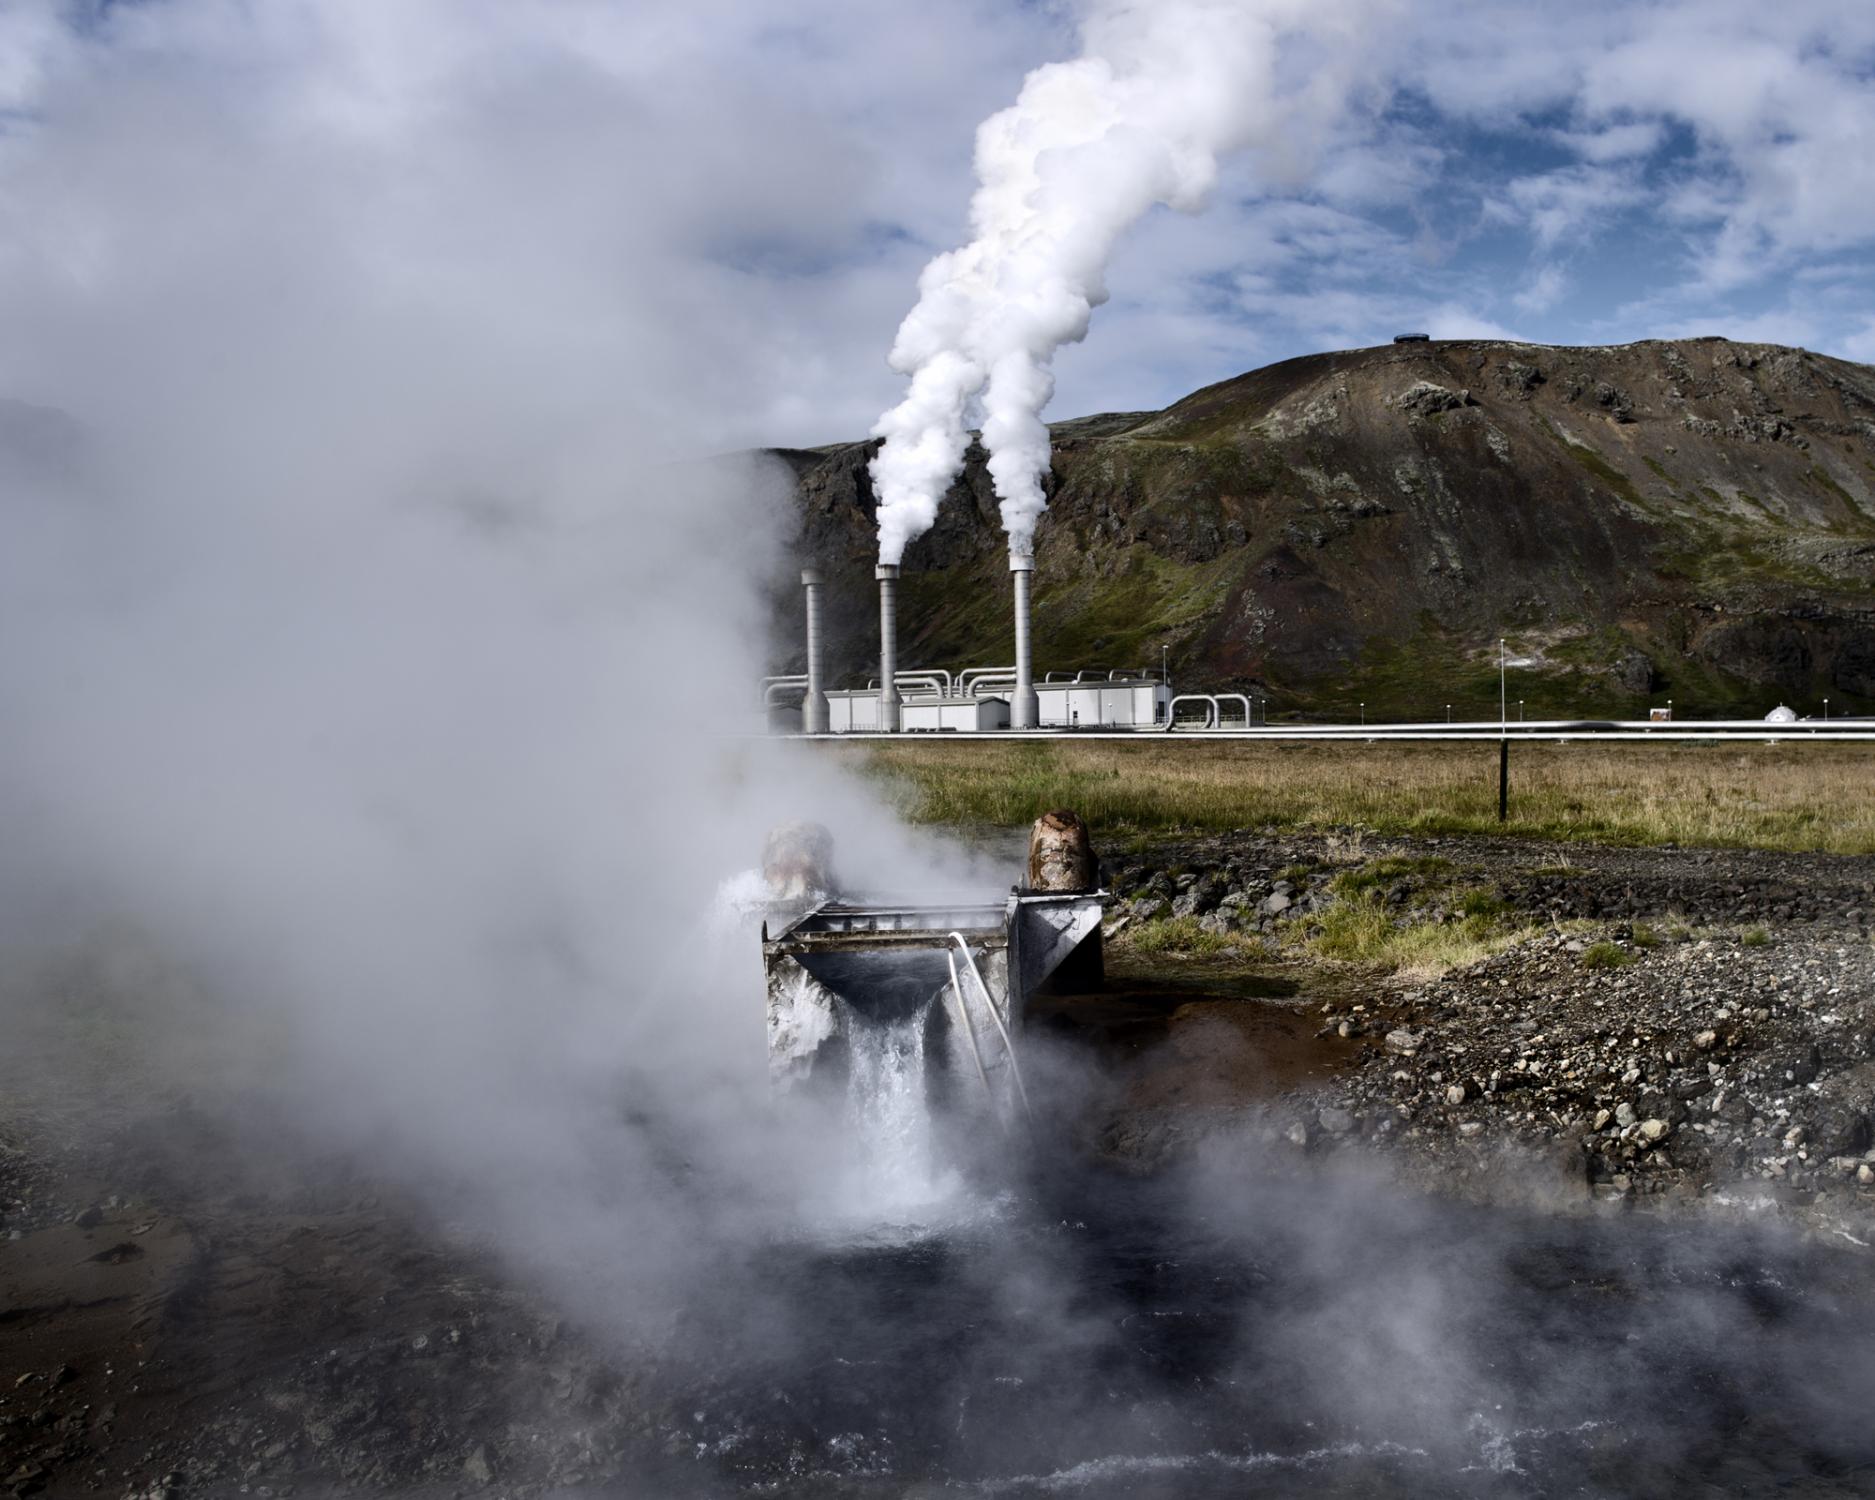 Steamland - Geothermal Power in Iceland.
August 2010.
Hengill,...